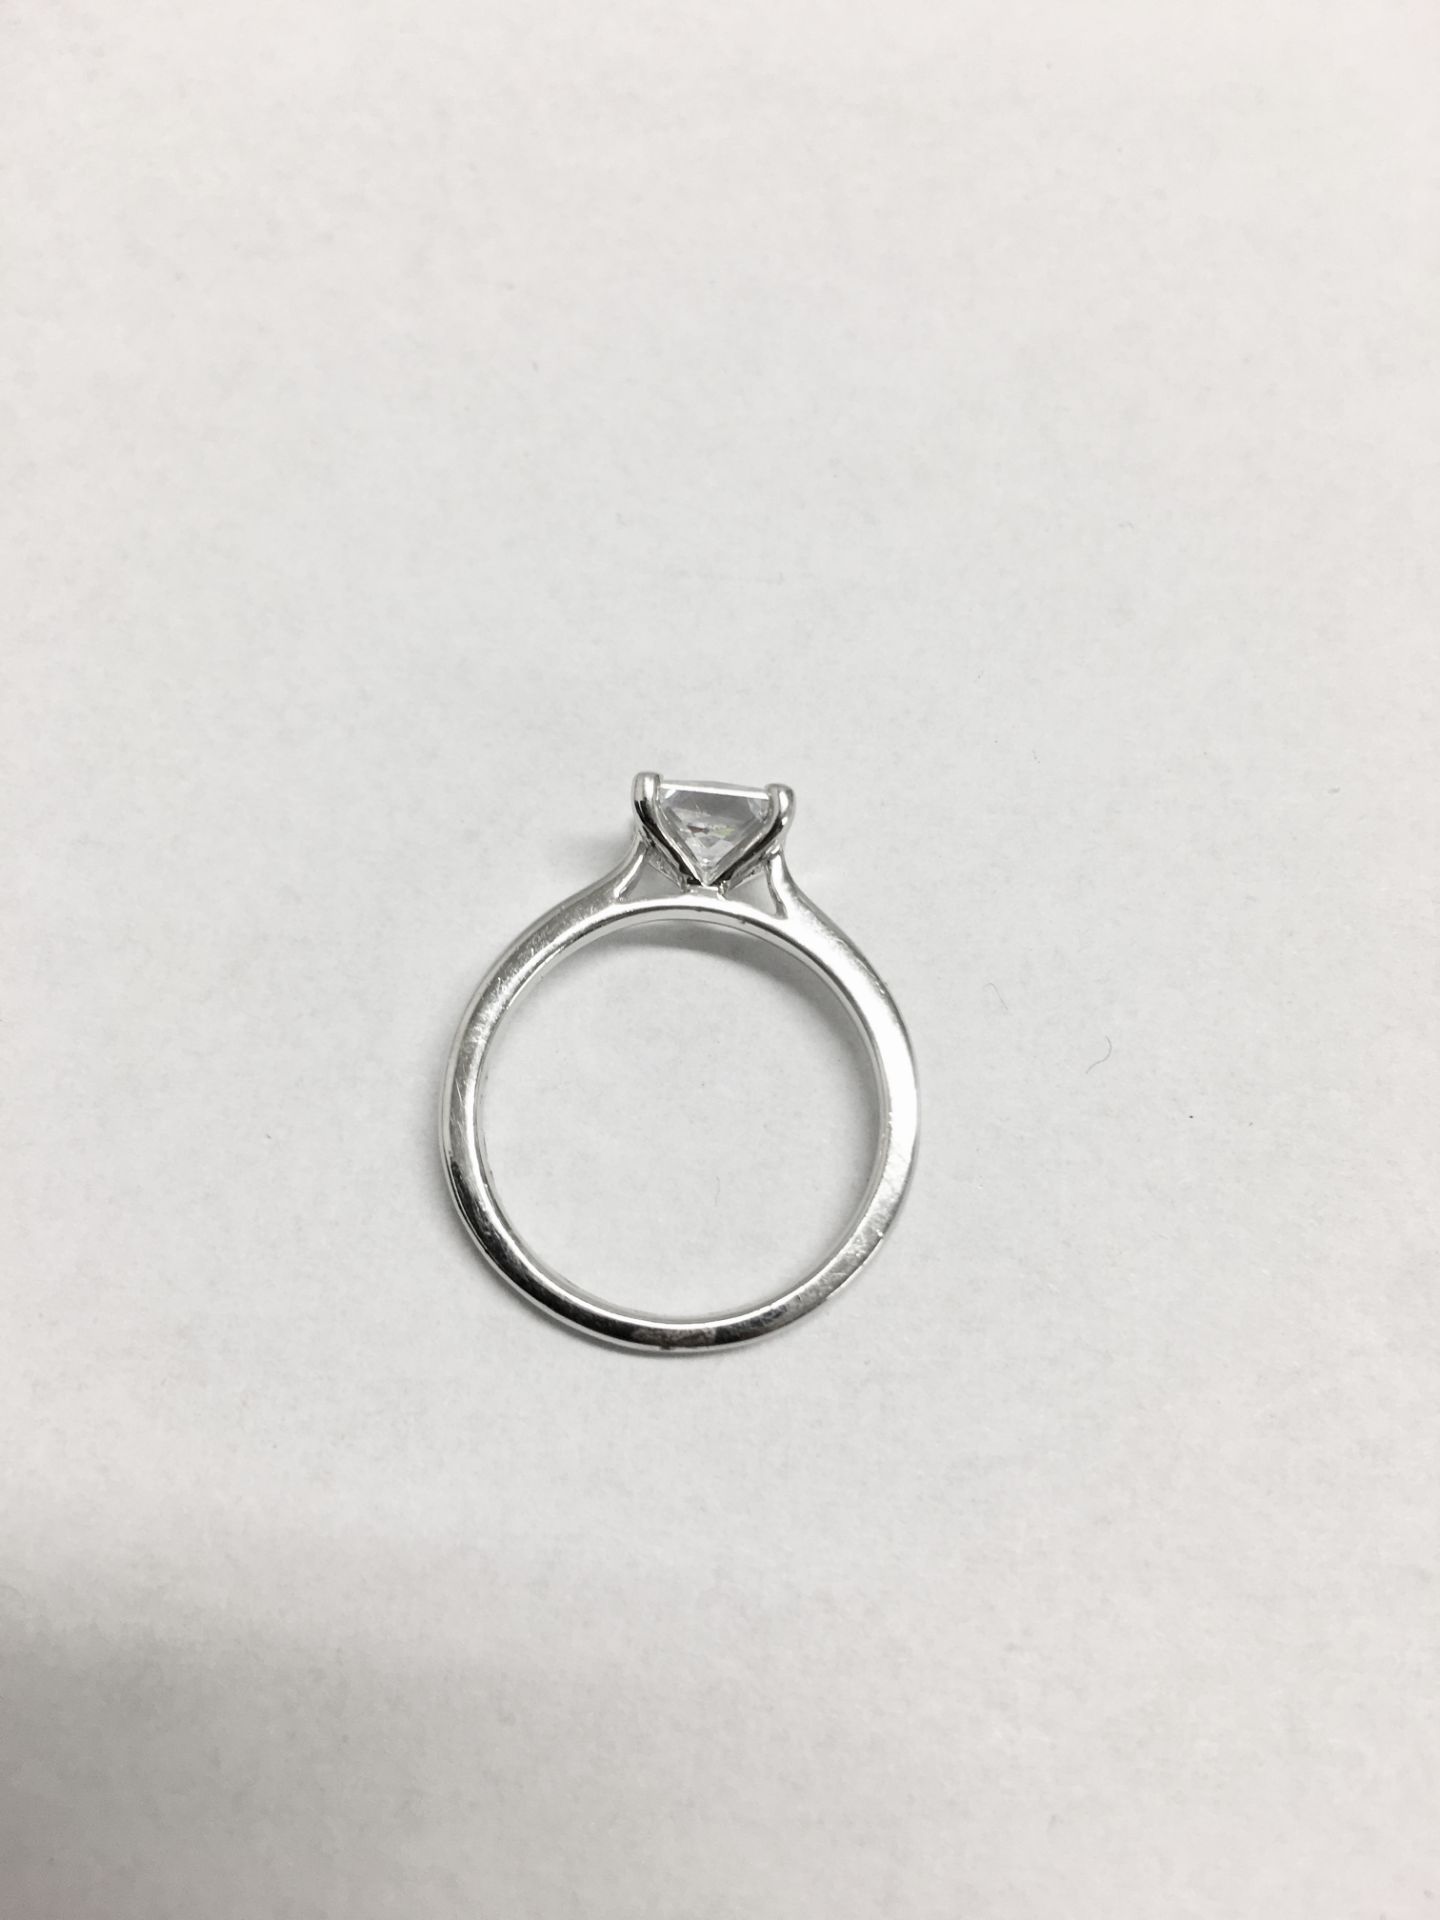 Platinum princess diamond solitaire ring,0.45ct princess cut diamon ,h colour si2 clarity,3.59gms - Image 2 of 3